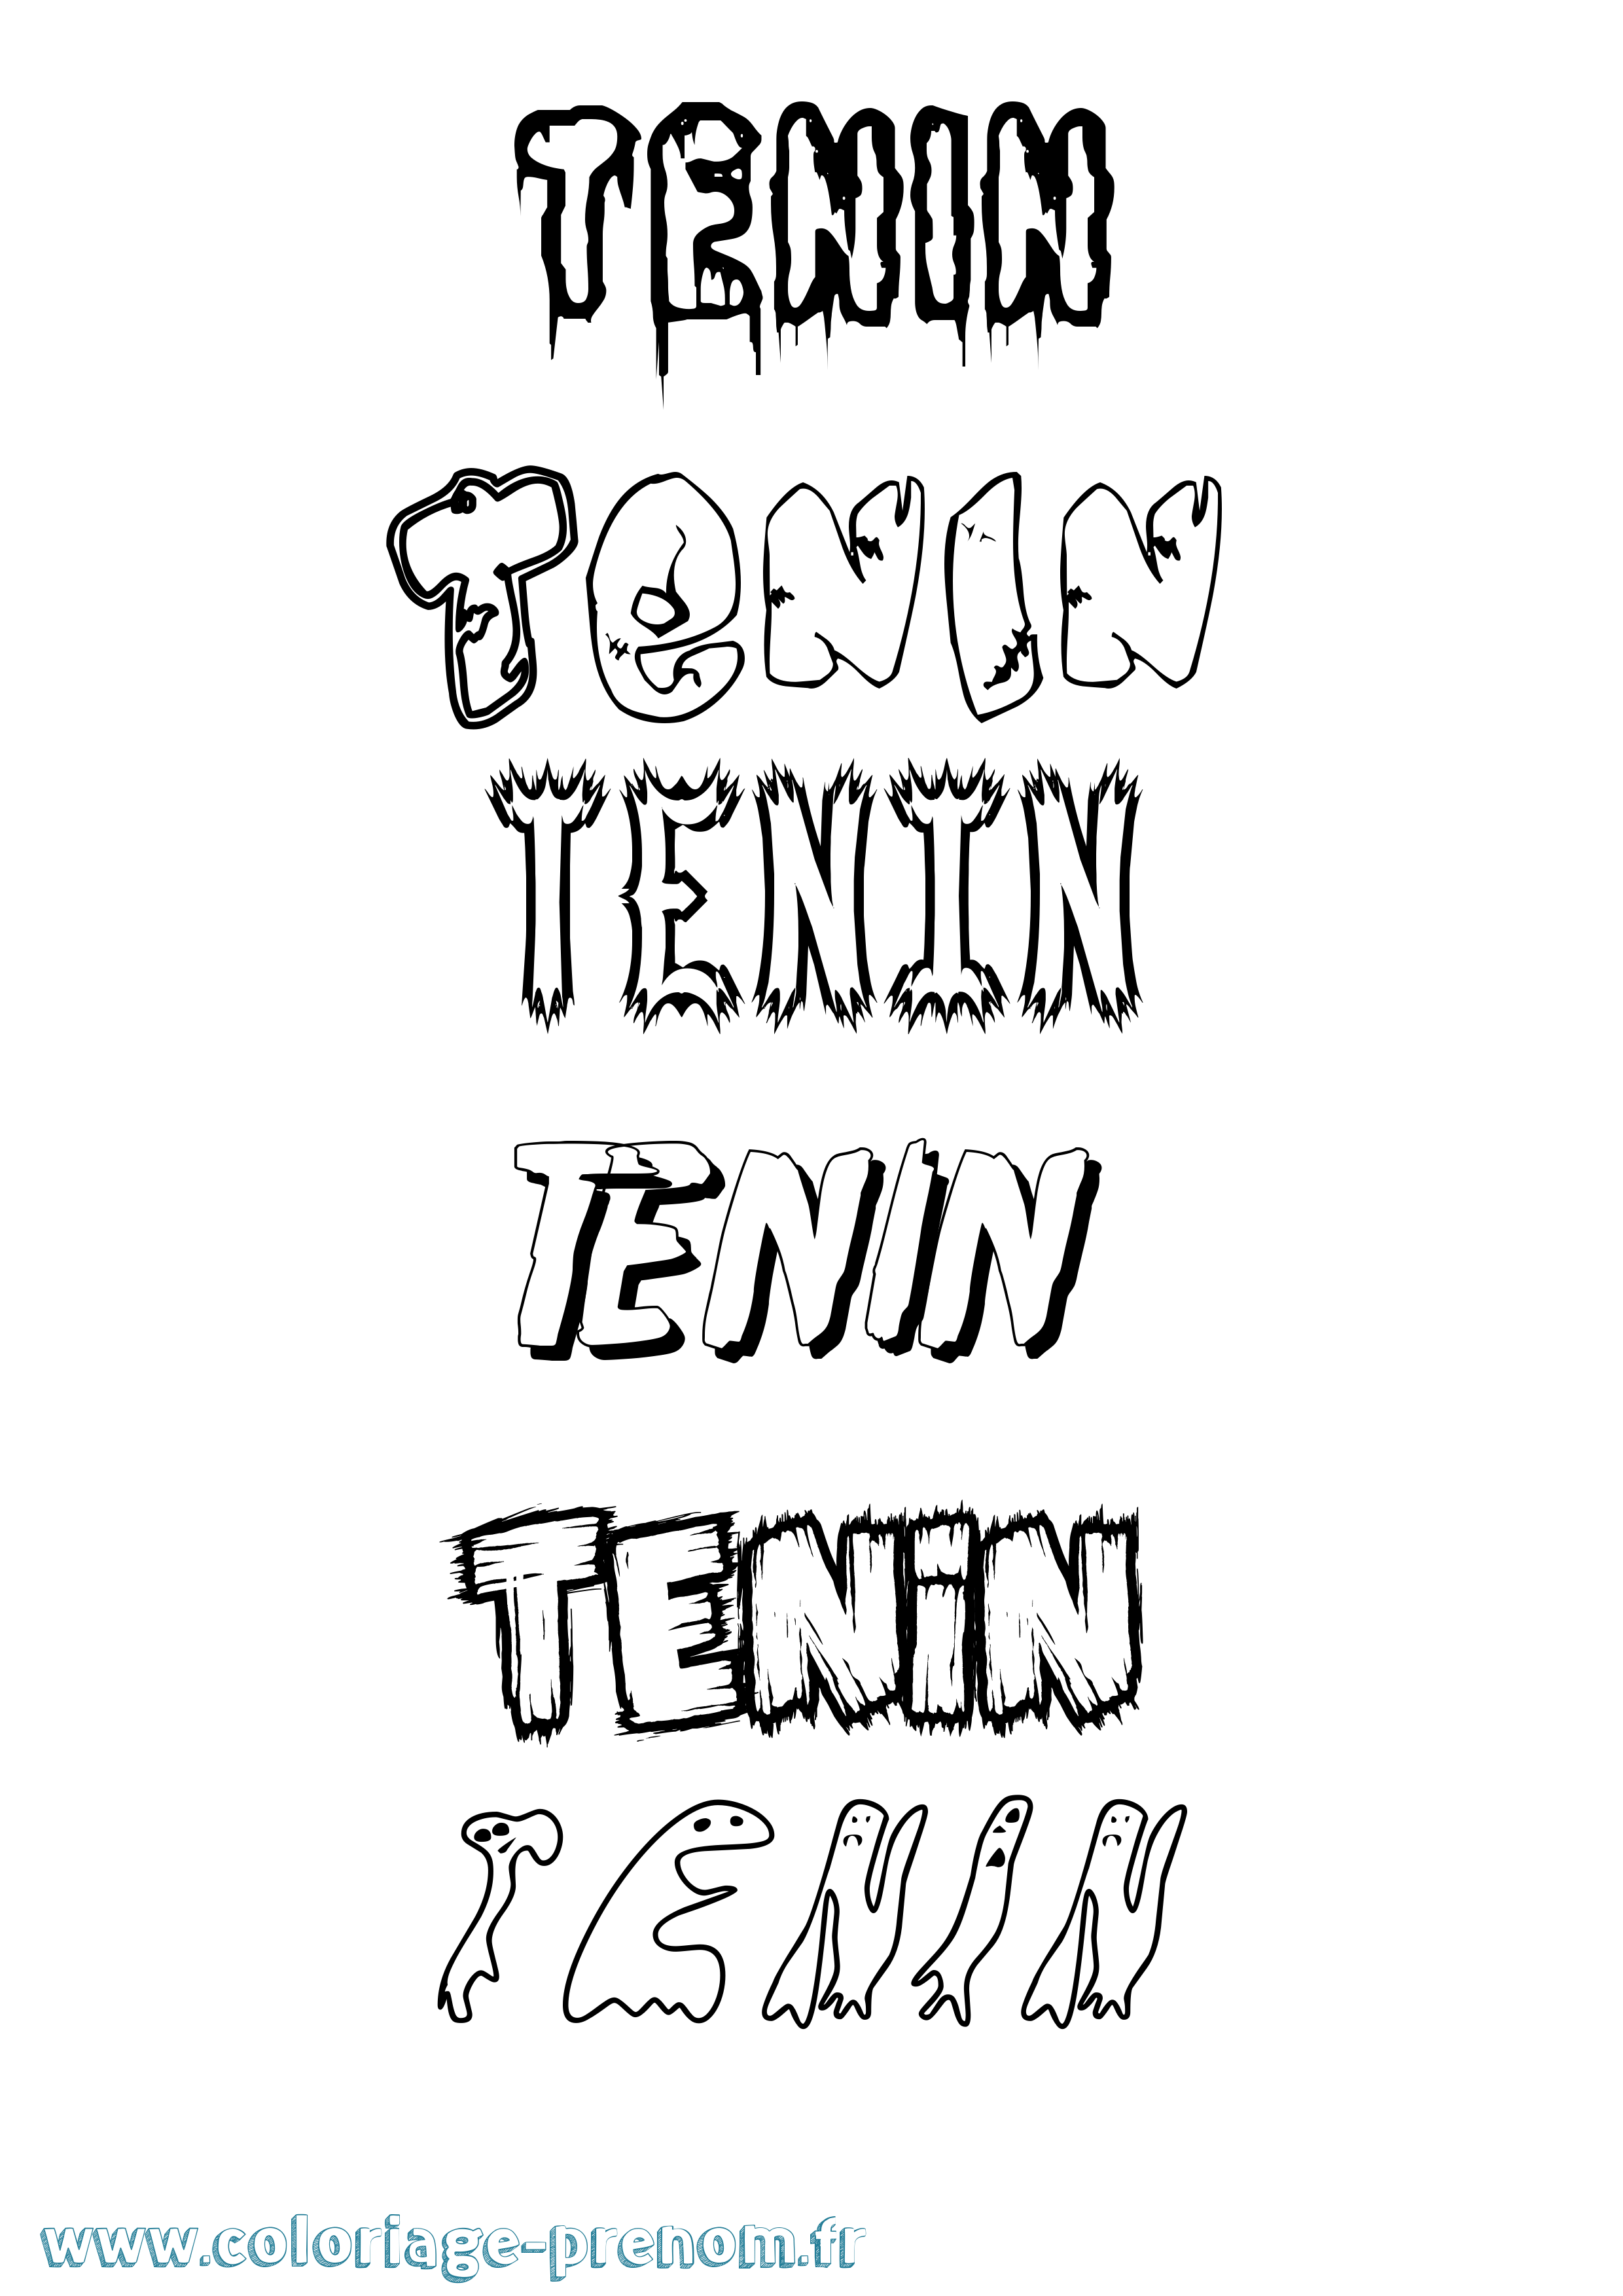 Coloriage prénom Tenin Frisson